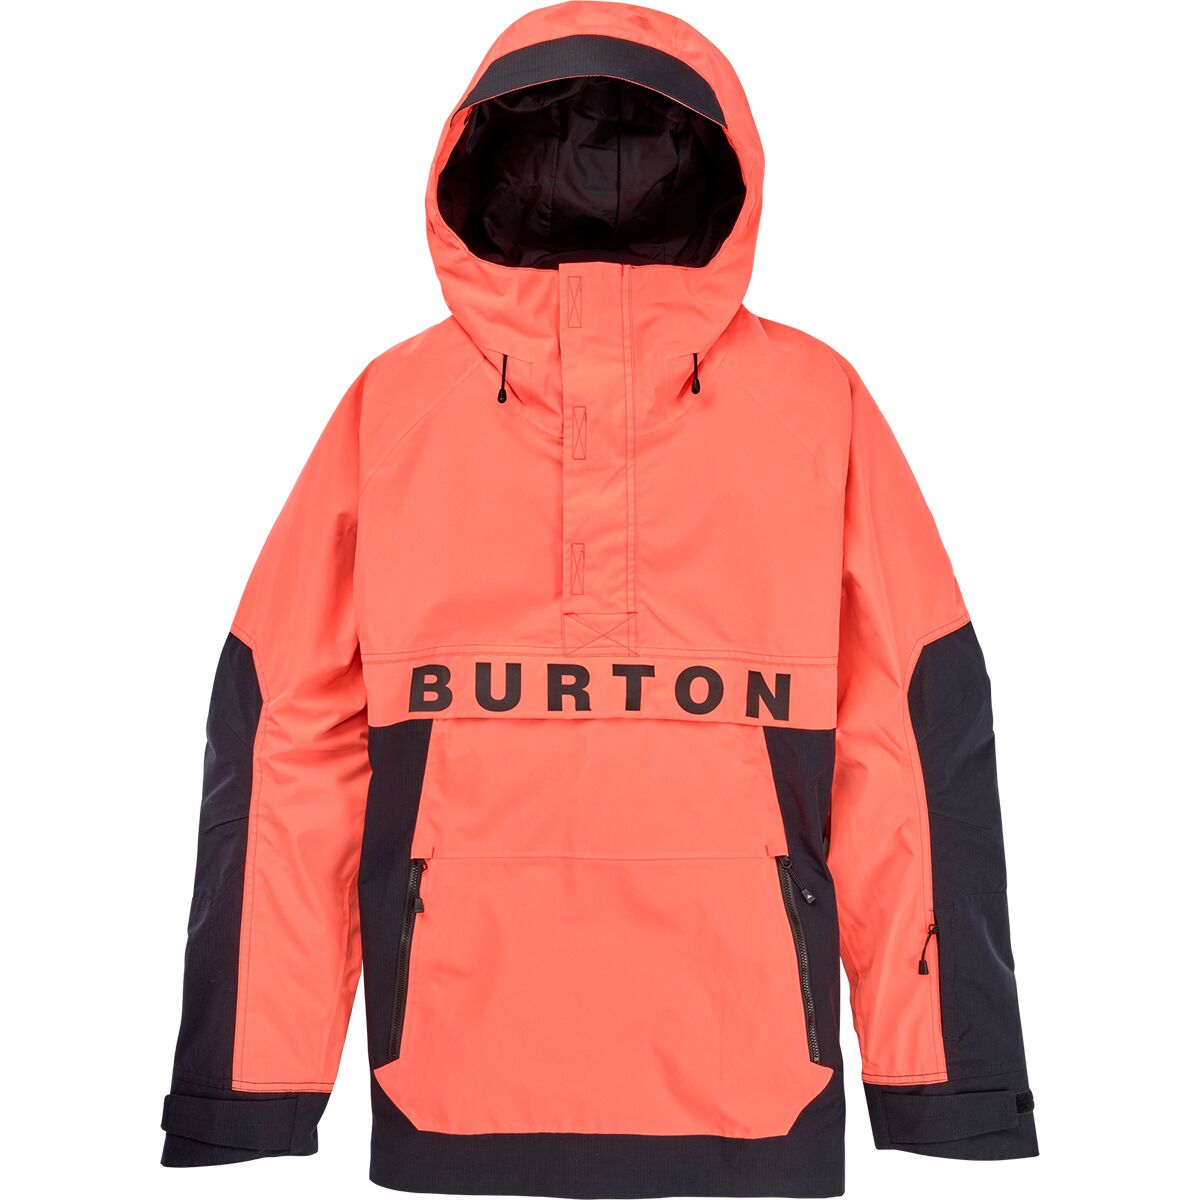 Burton Frostner Anorak Jacket - Men's Tetra Orange/True Black